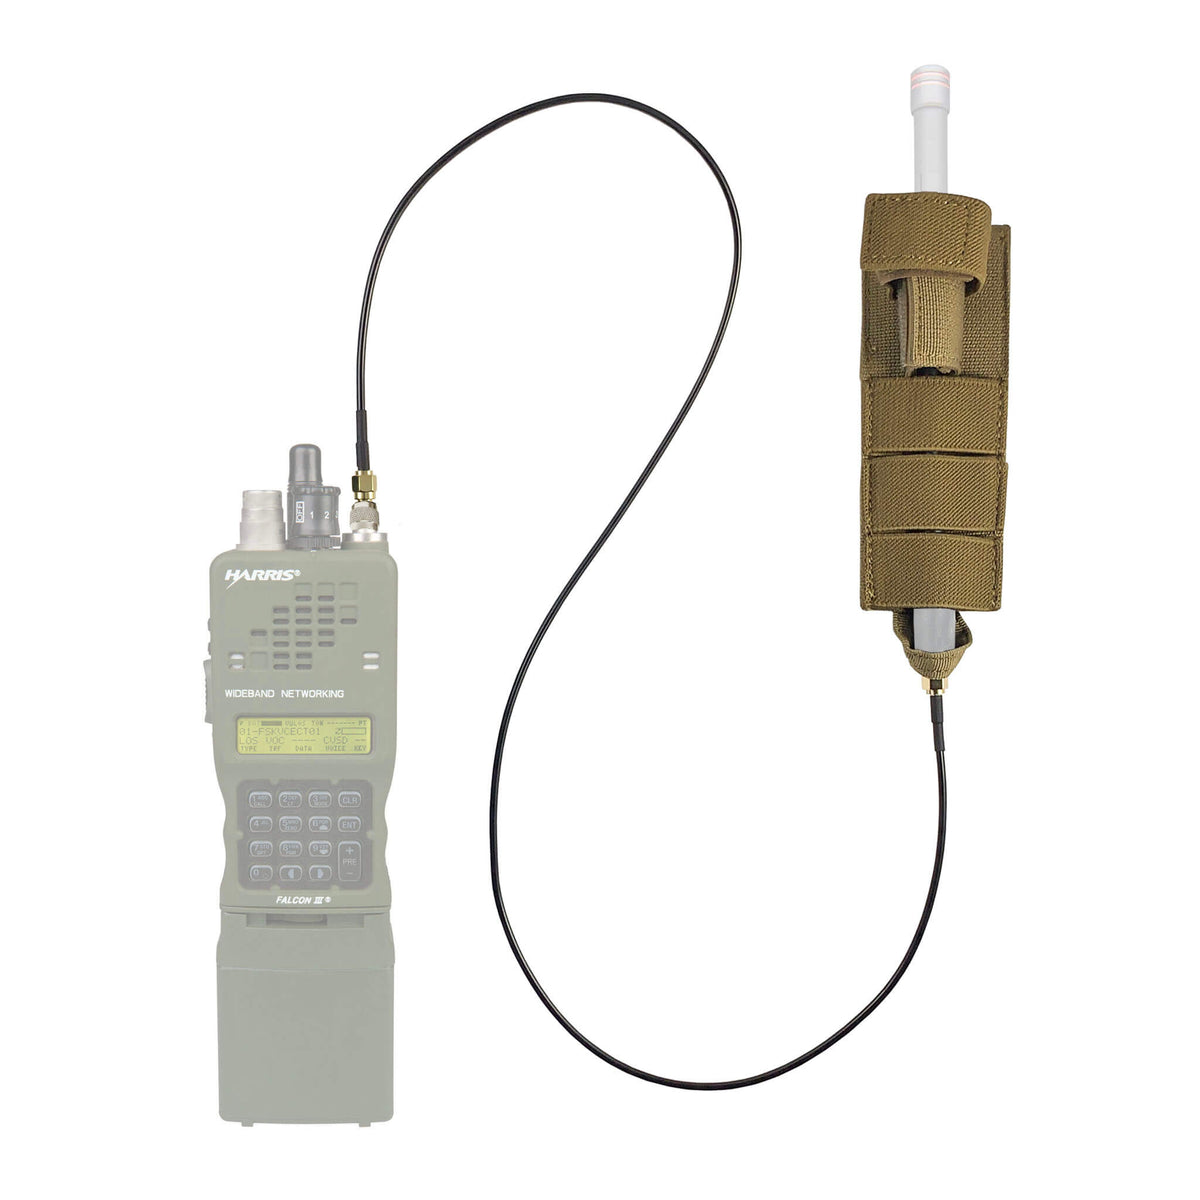 Tactical Antenna Relocation Kit(Black, Tan, or Green) - Military Radios:  Harris, Thales, Tri, PRC, Falcon Series, MBITR Series